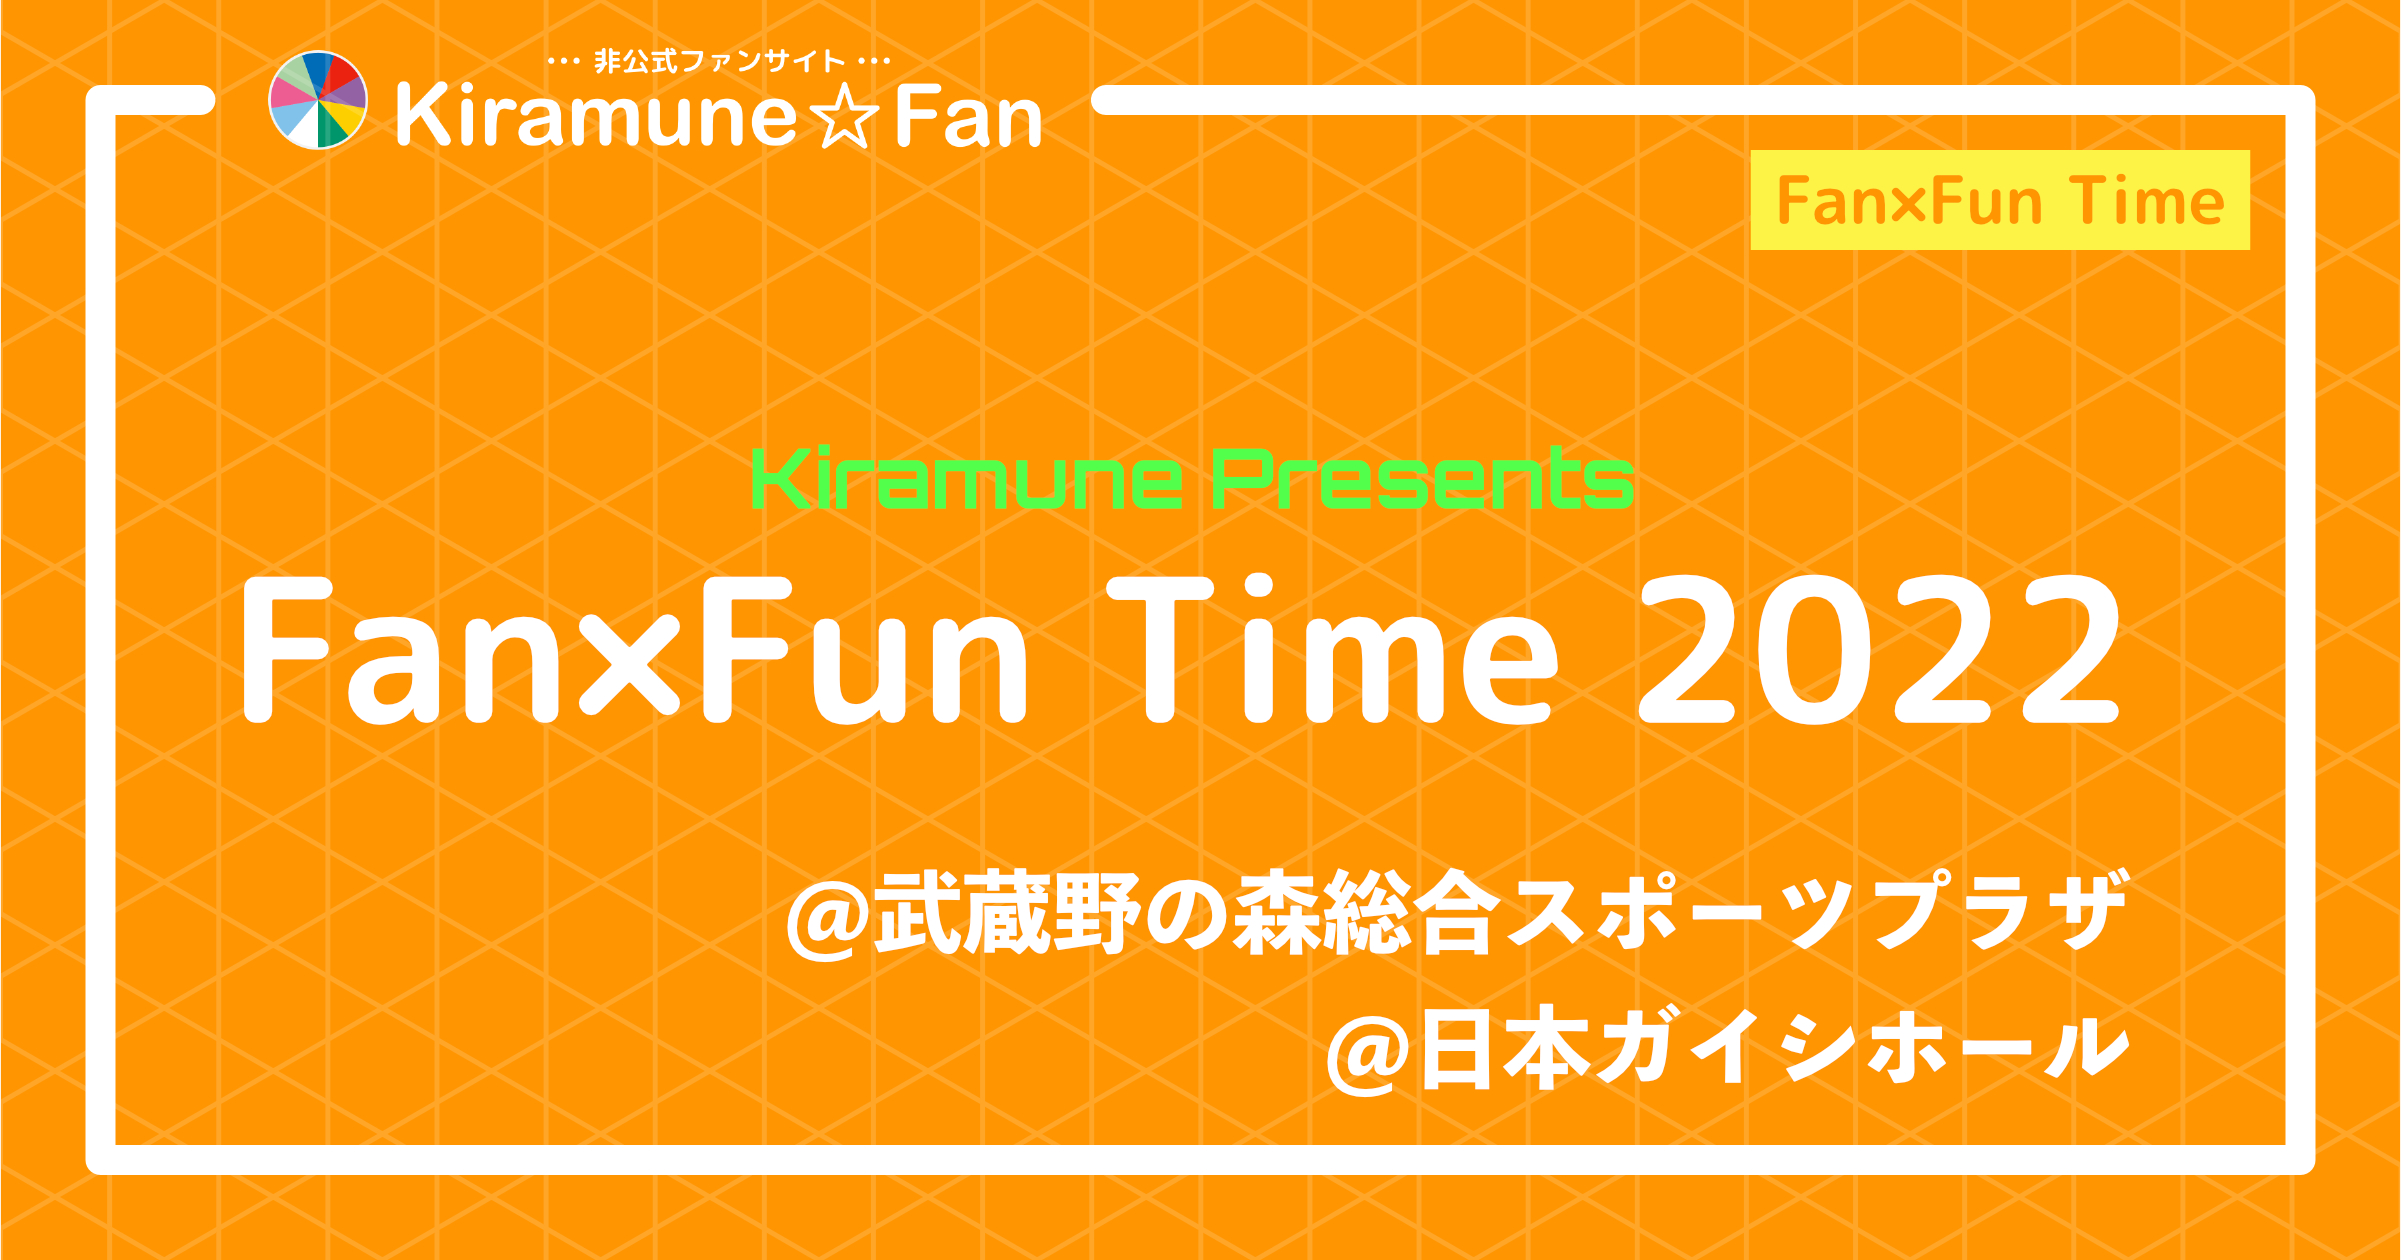 Kiramune Presents Fan×Fun Time 2022 | Kiramune☆Fan